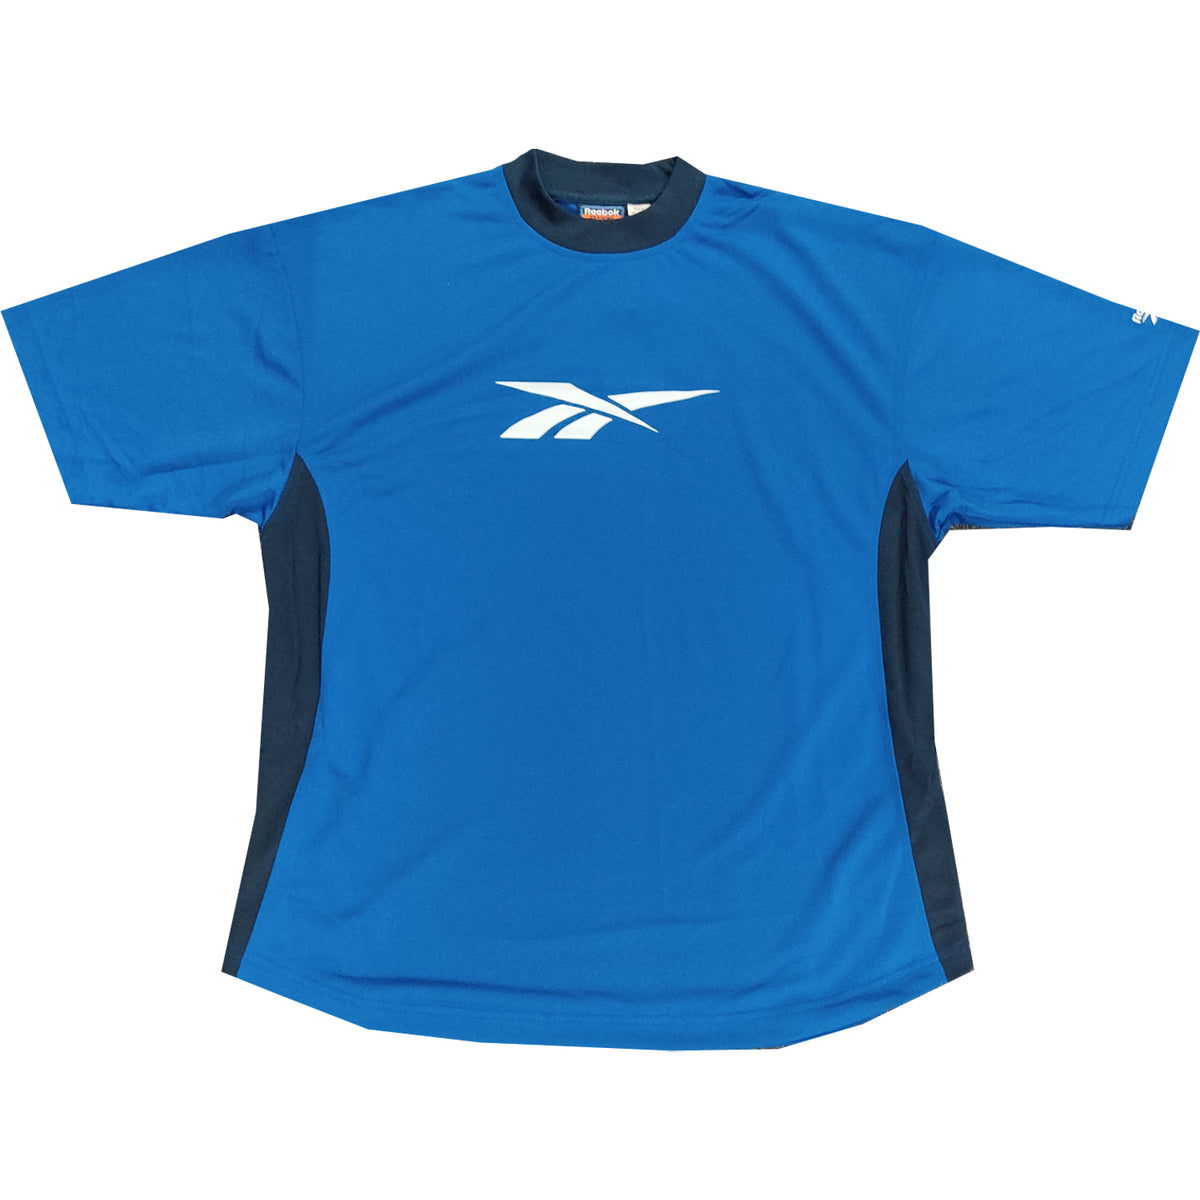 Reebok Mens Clearance Big Logo Blue T-Shirt - Medium